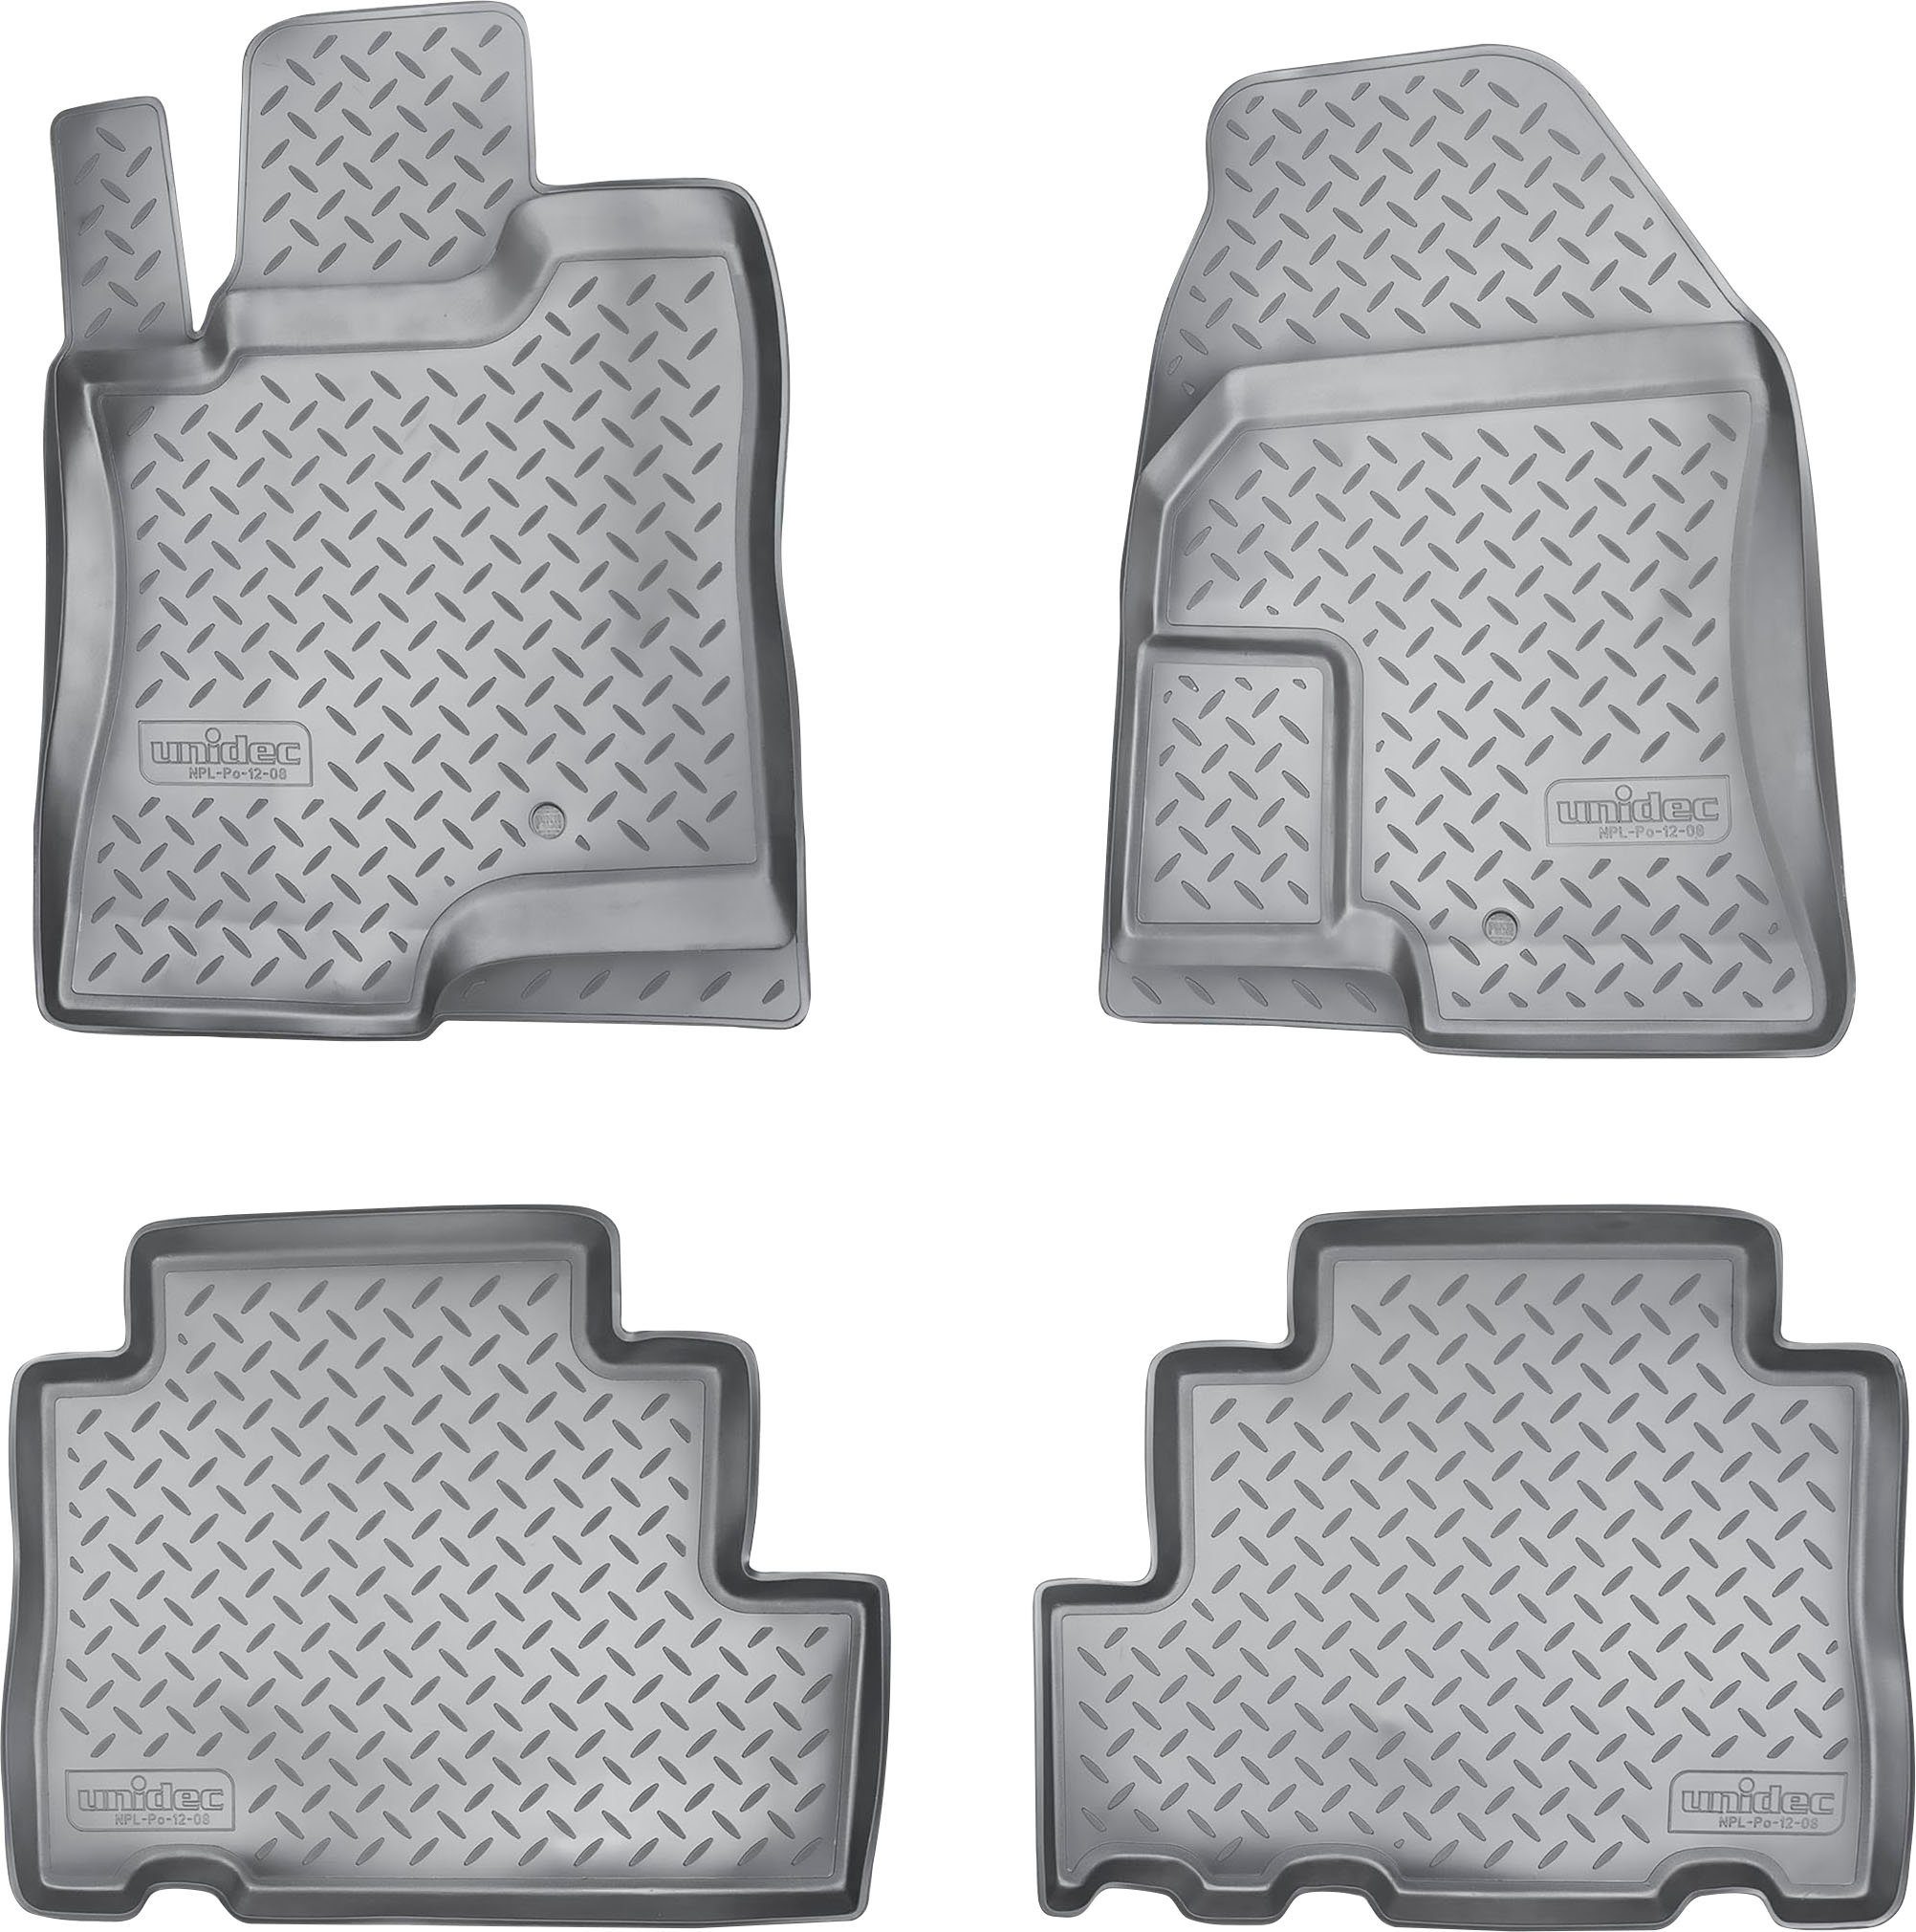 RECAMBO Passform-Fußmatten Captiva, Chevrolet für Passform ab OPEL 2006, Antara CustomComforts (4 St), perfekte